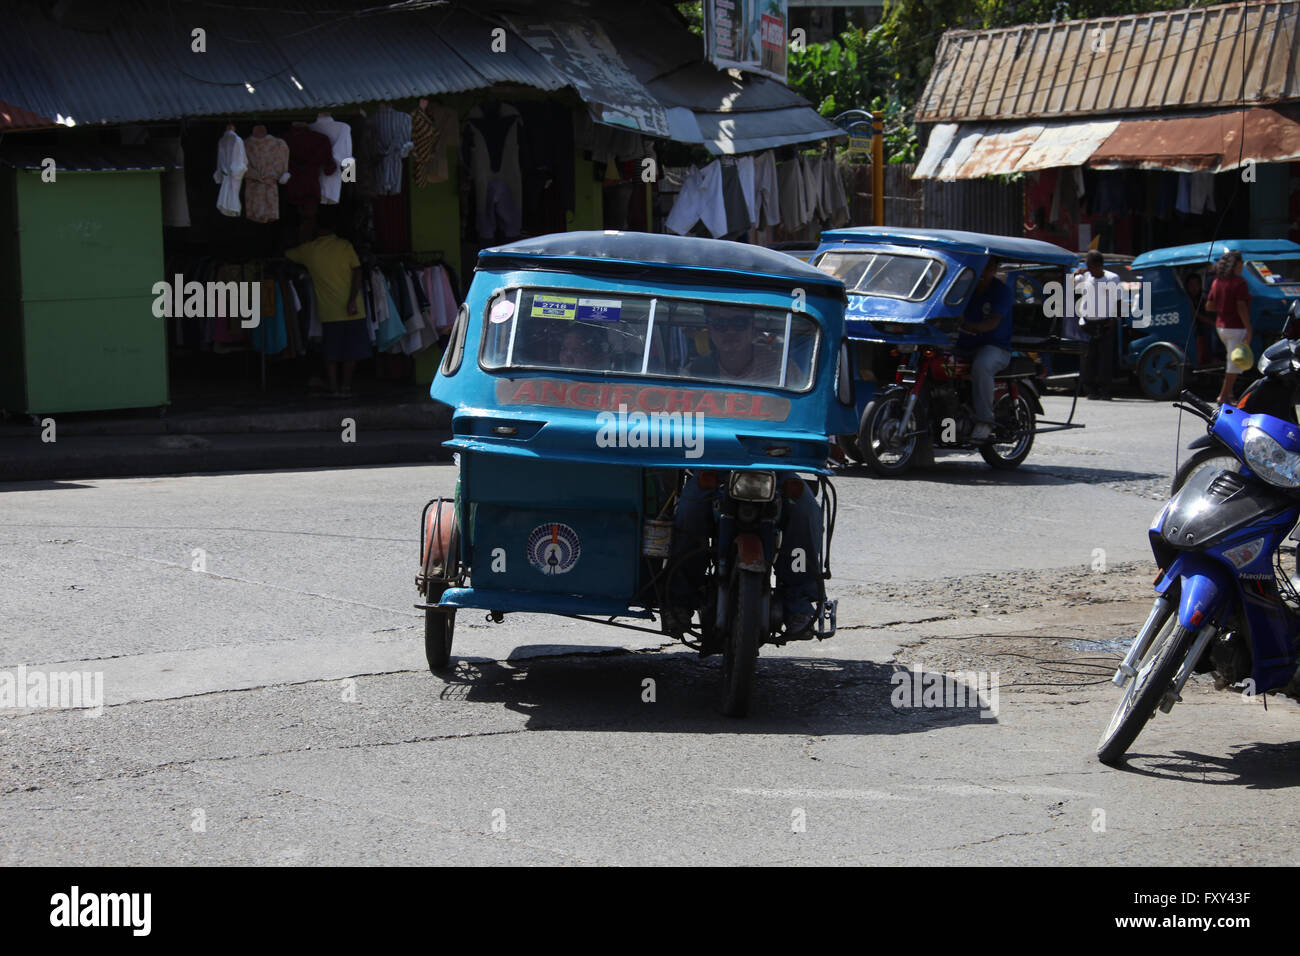 BLUE TRIKES ON STREET PUERTO PRINCESA PHILIPPINES ASIA 23 April 2015 Stock Photo